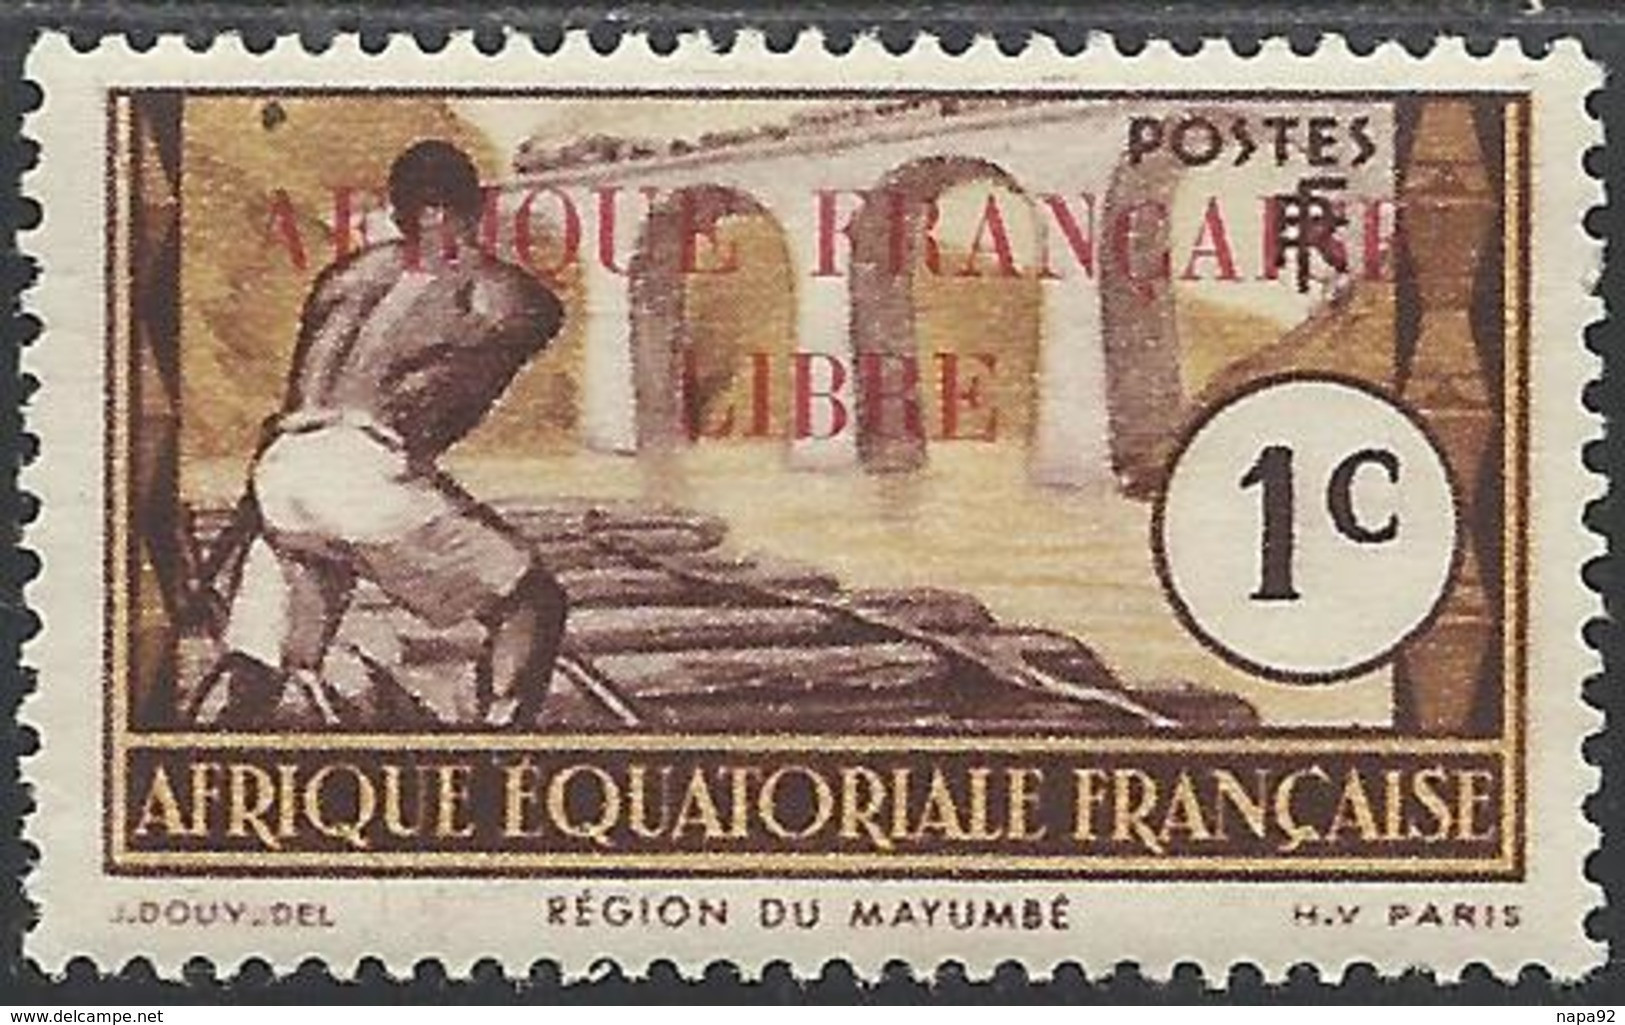 AFRIQUE EQUATORIALE FRANCAISE - AEF - A.E.F. - 1940 - YT 92** - Ongebruikt